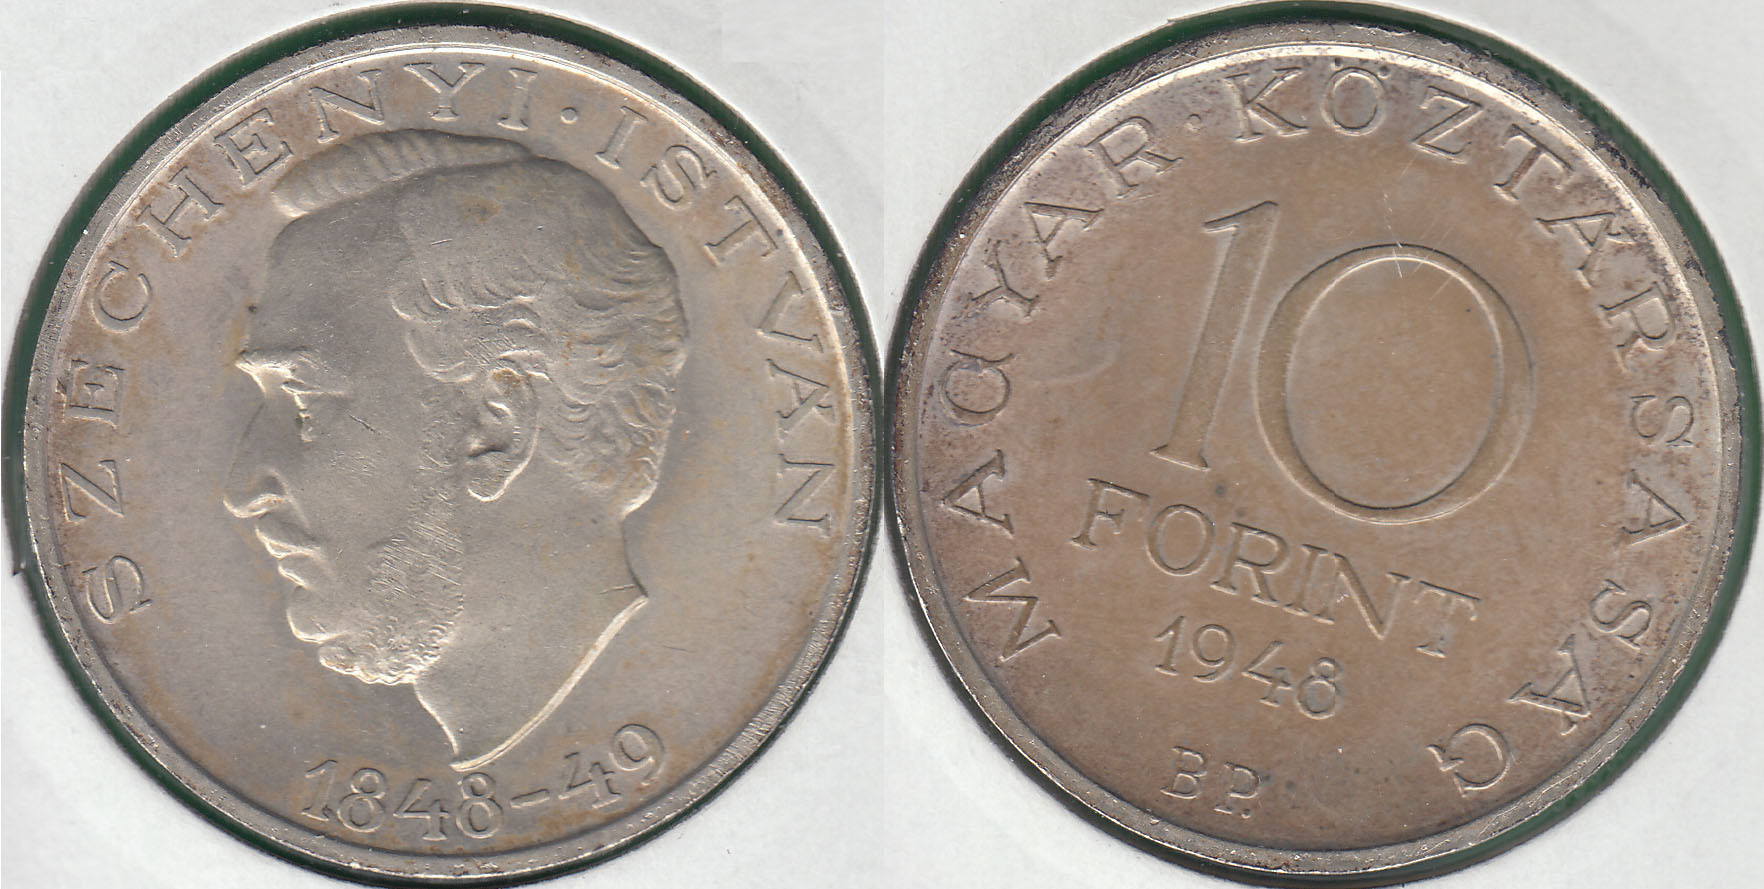 HUNGRIA - HUNGARY. 10 FORINT DE 1948 BP. PLATA 0.500.